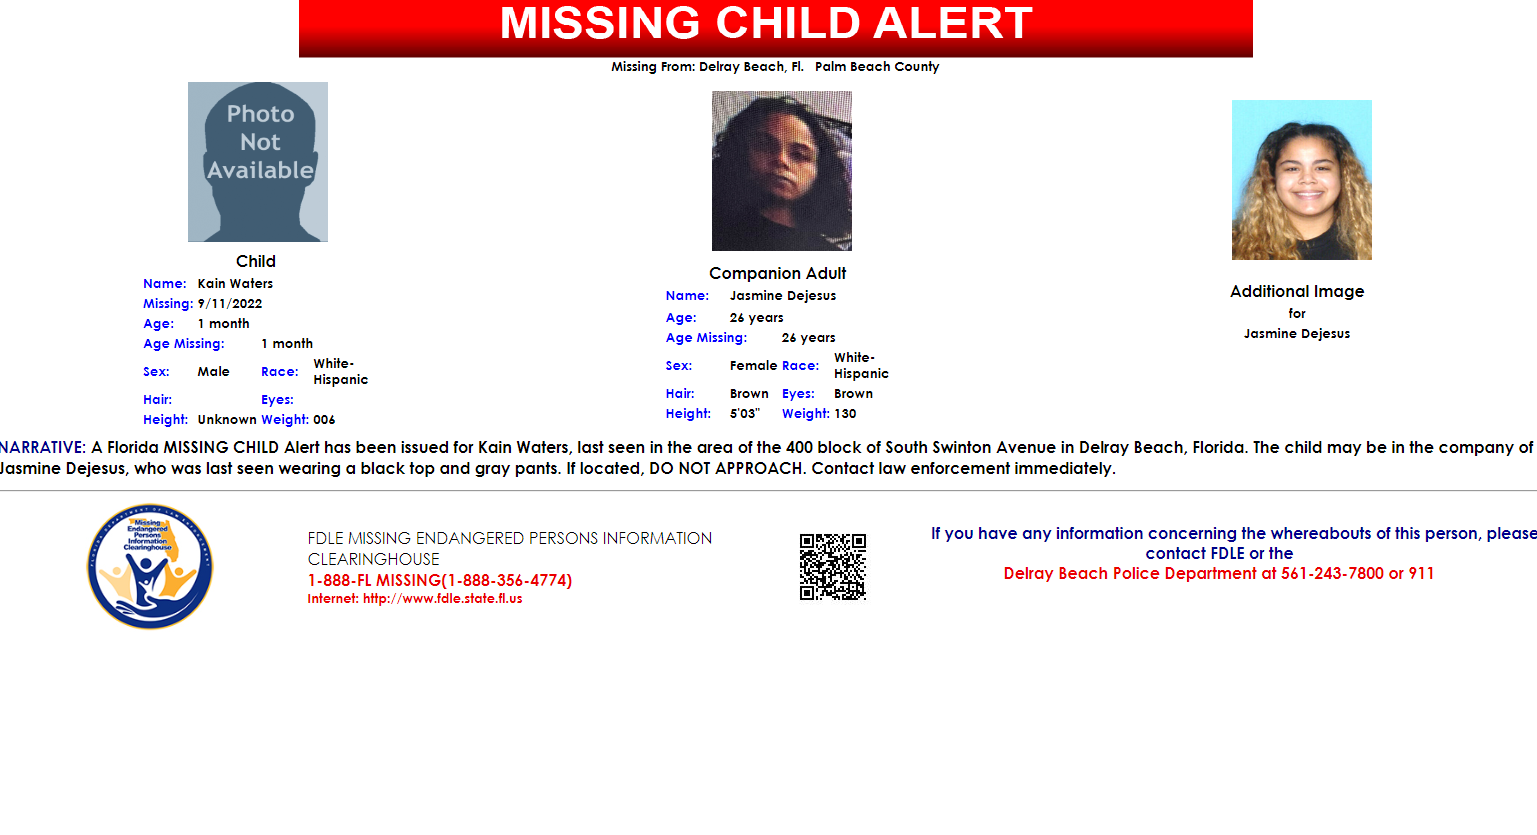 Florida Missing Child Alert issued for 1-month-old boy